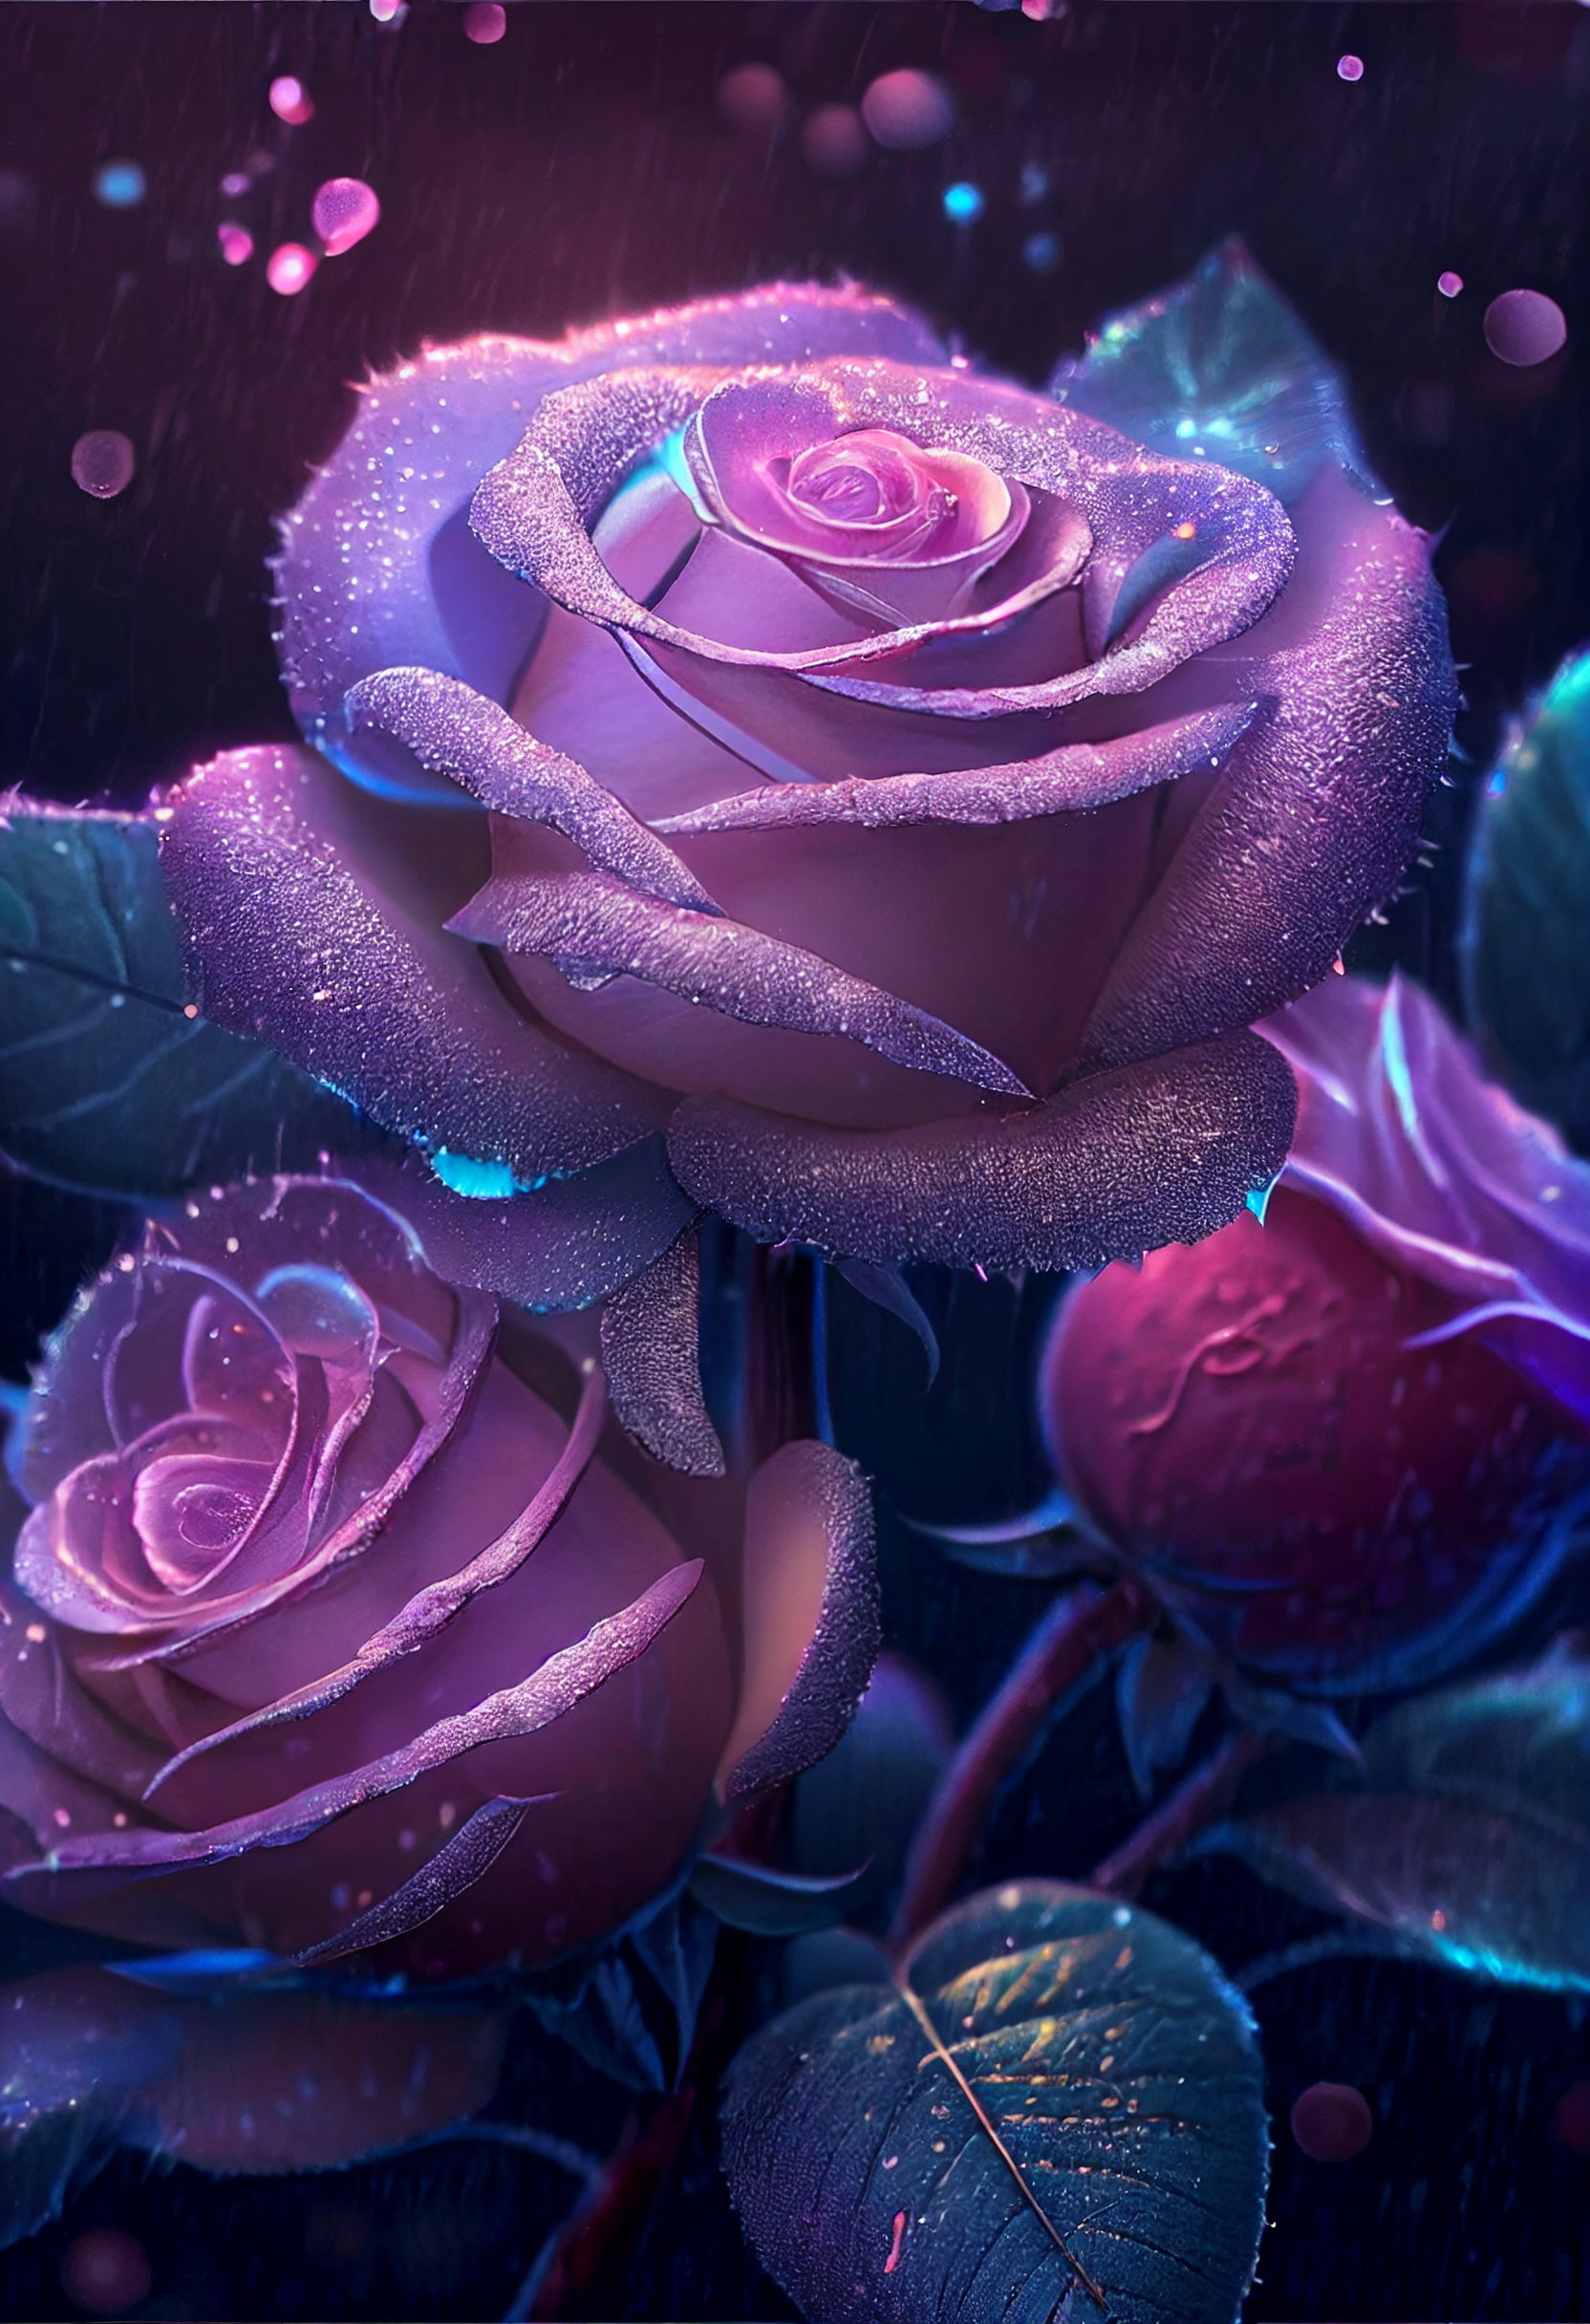 【1280x1024】美丽的紫色玫瑰壁纸 - 彼岸桌面